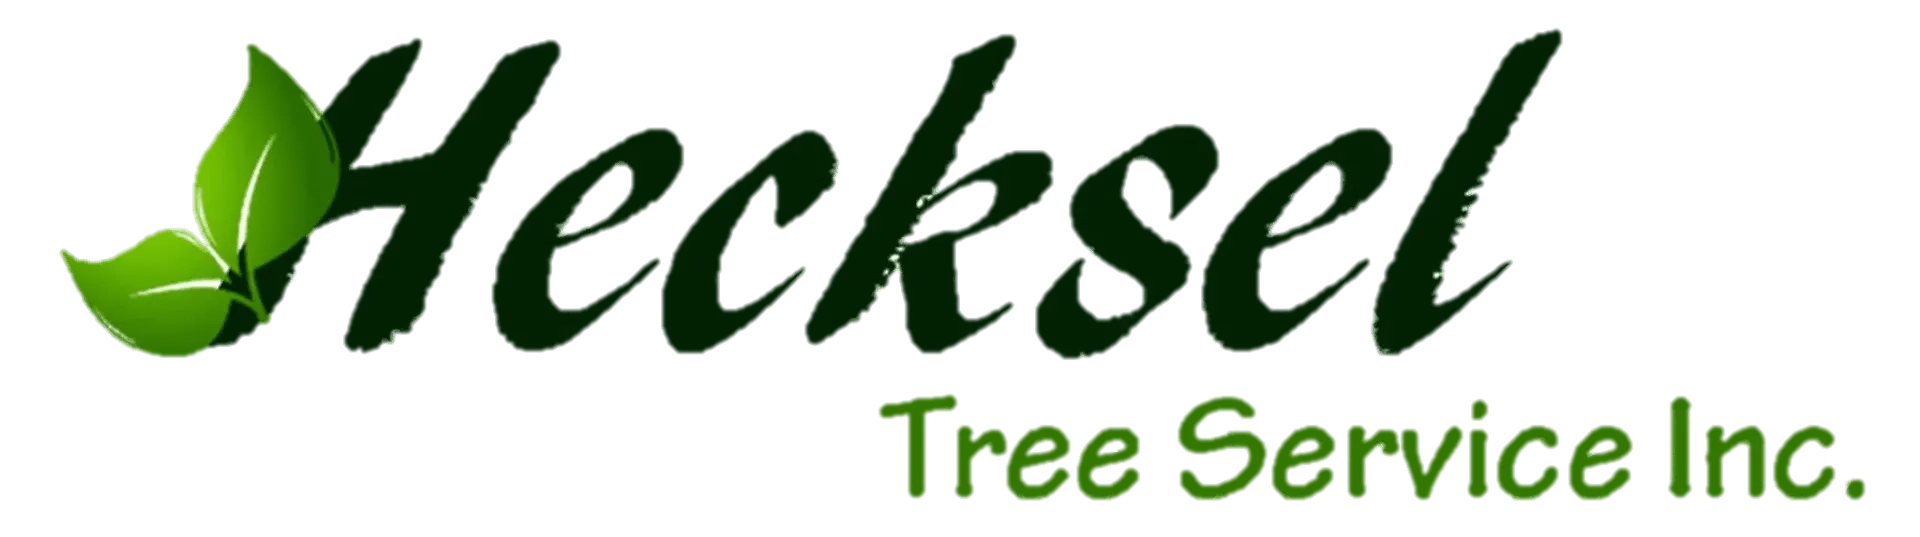 Hecksel Tree Service Inc Logo